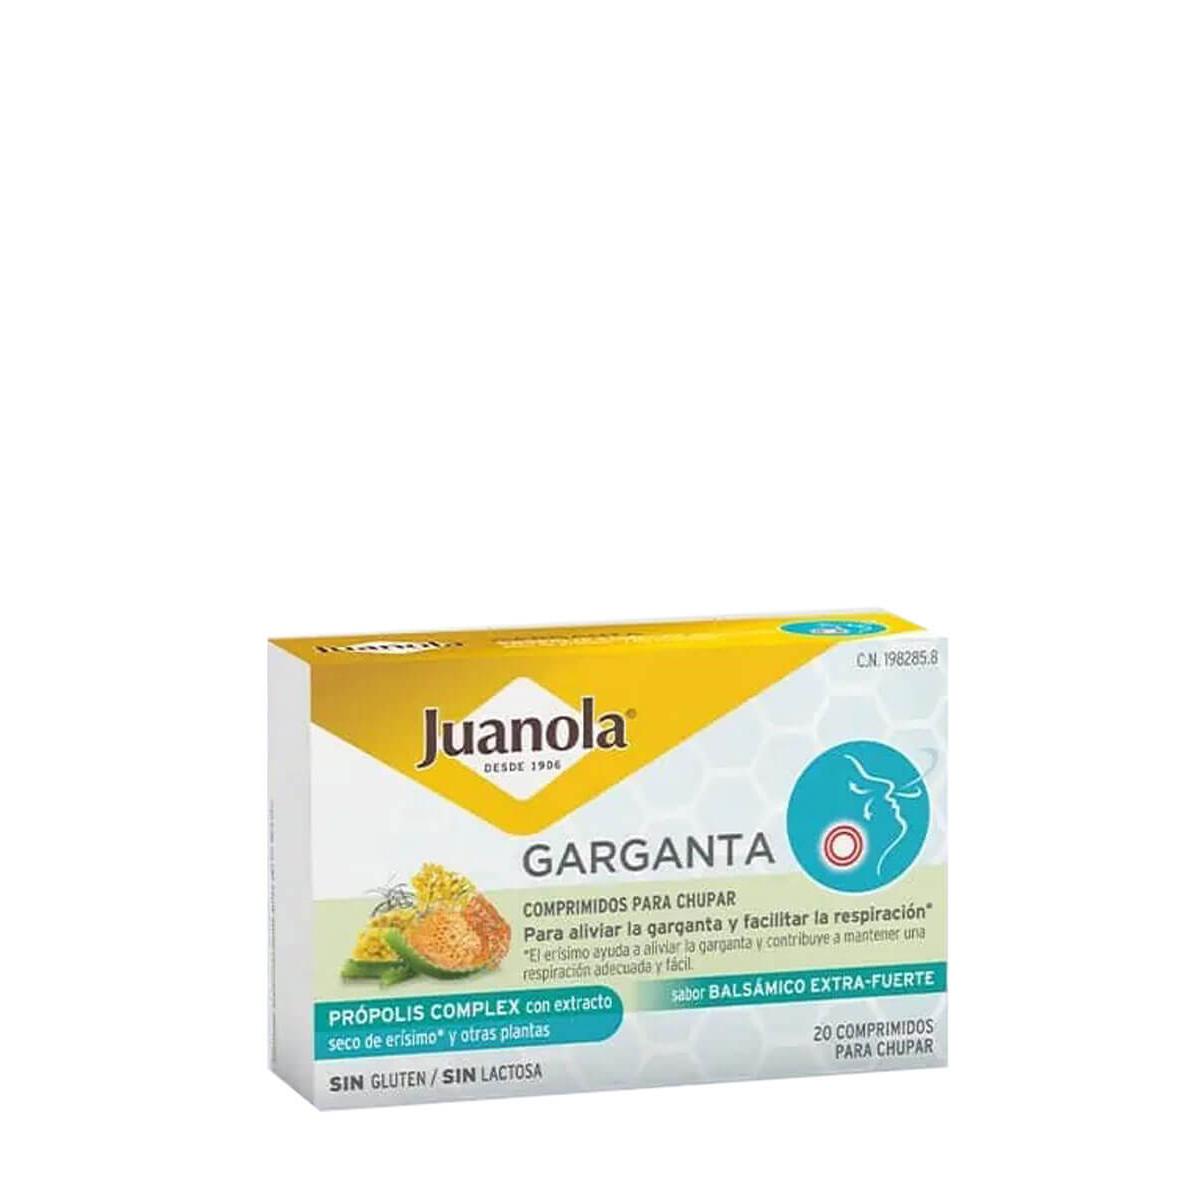 Juanola - Juanola garganta sabor balsámico extra fuerte 20 comprimidos para chupar